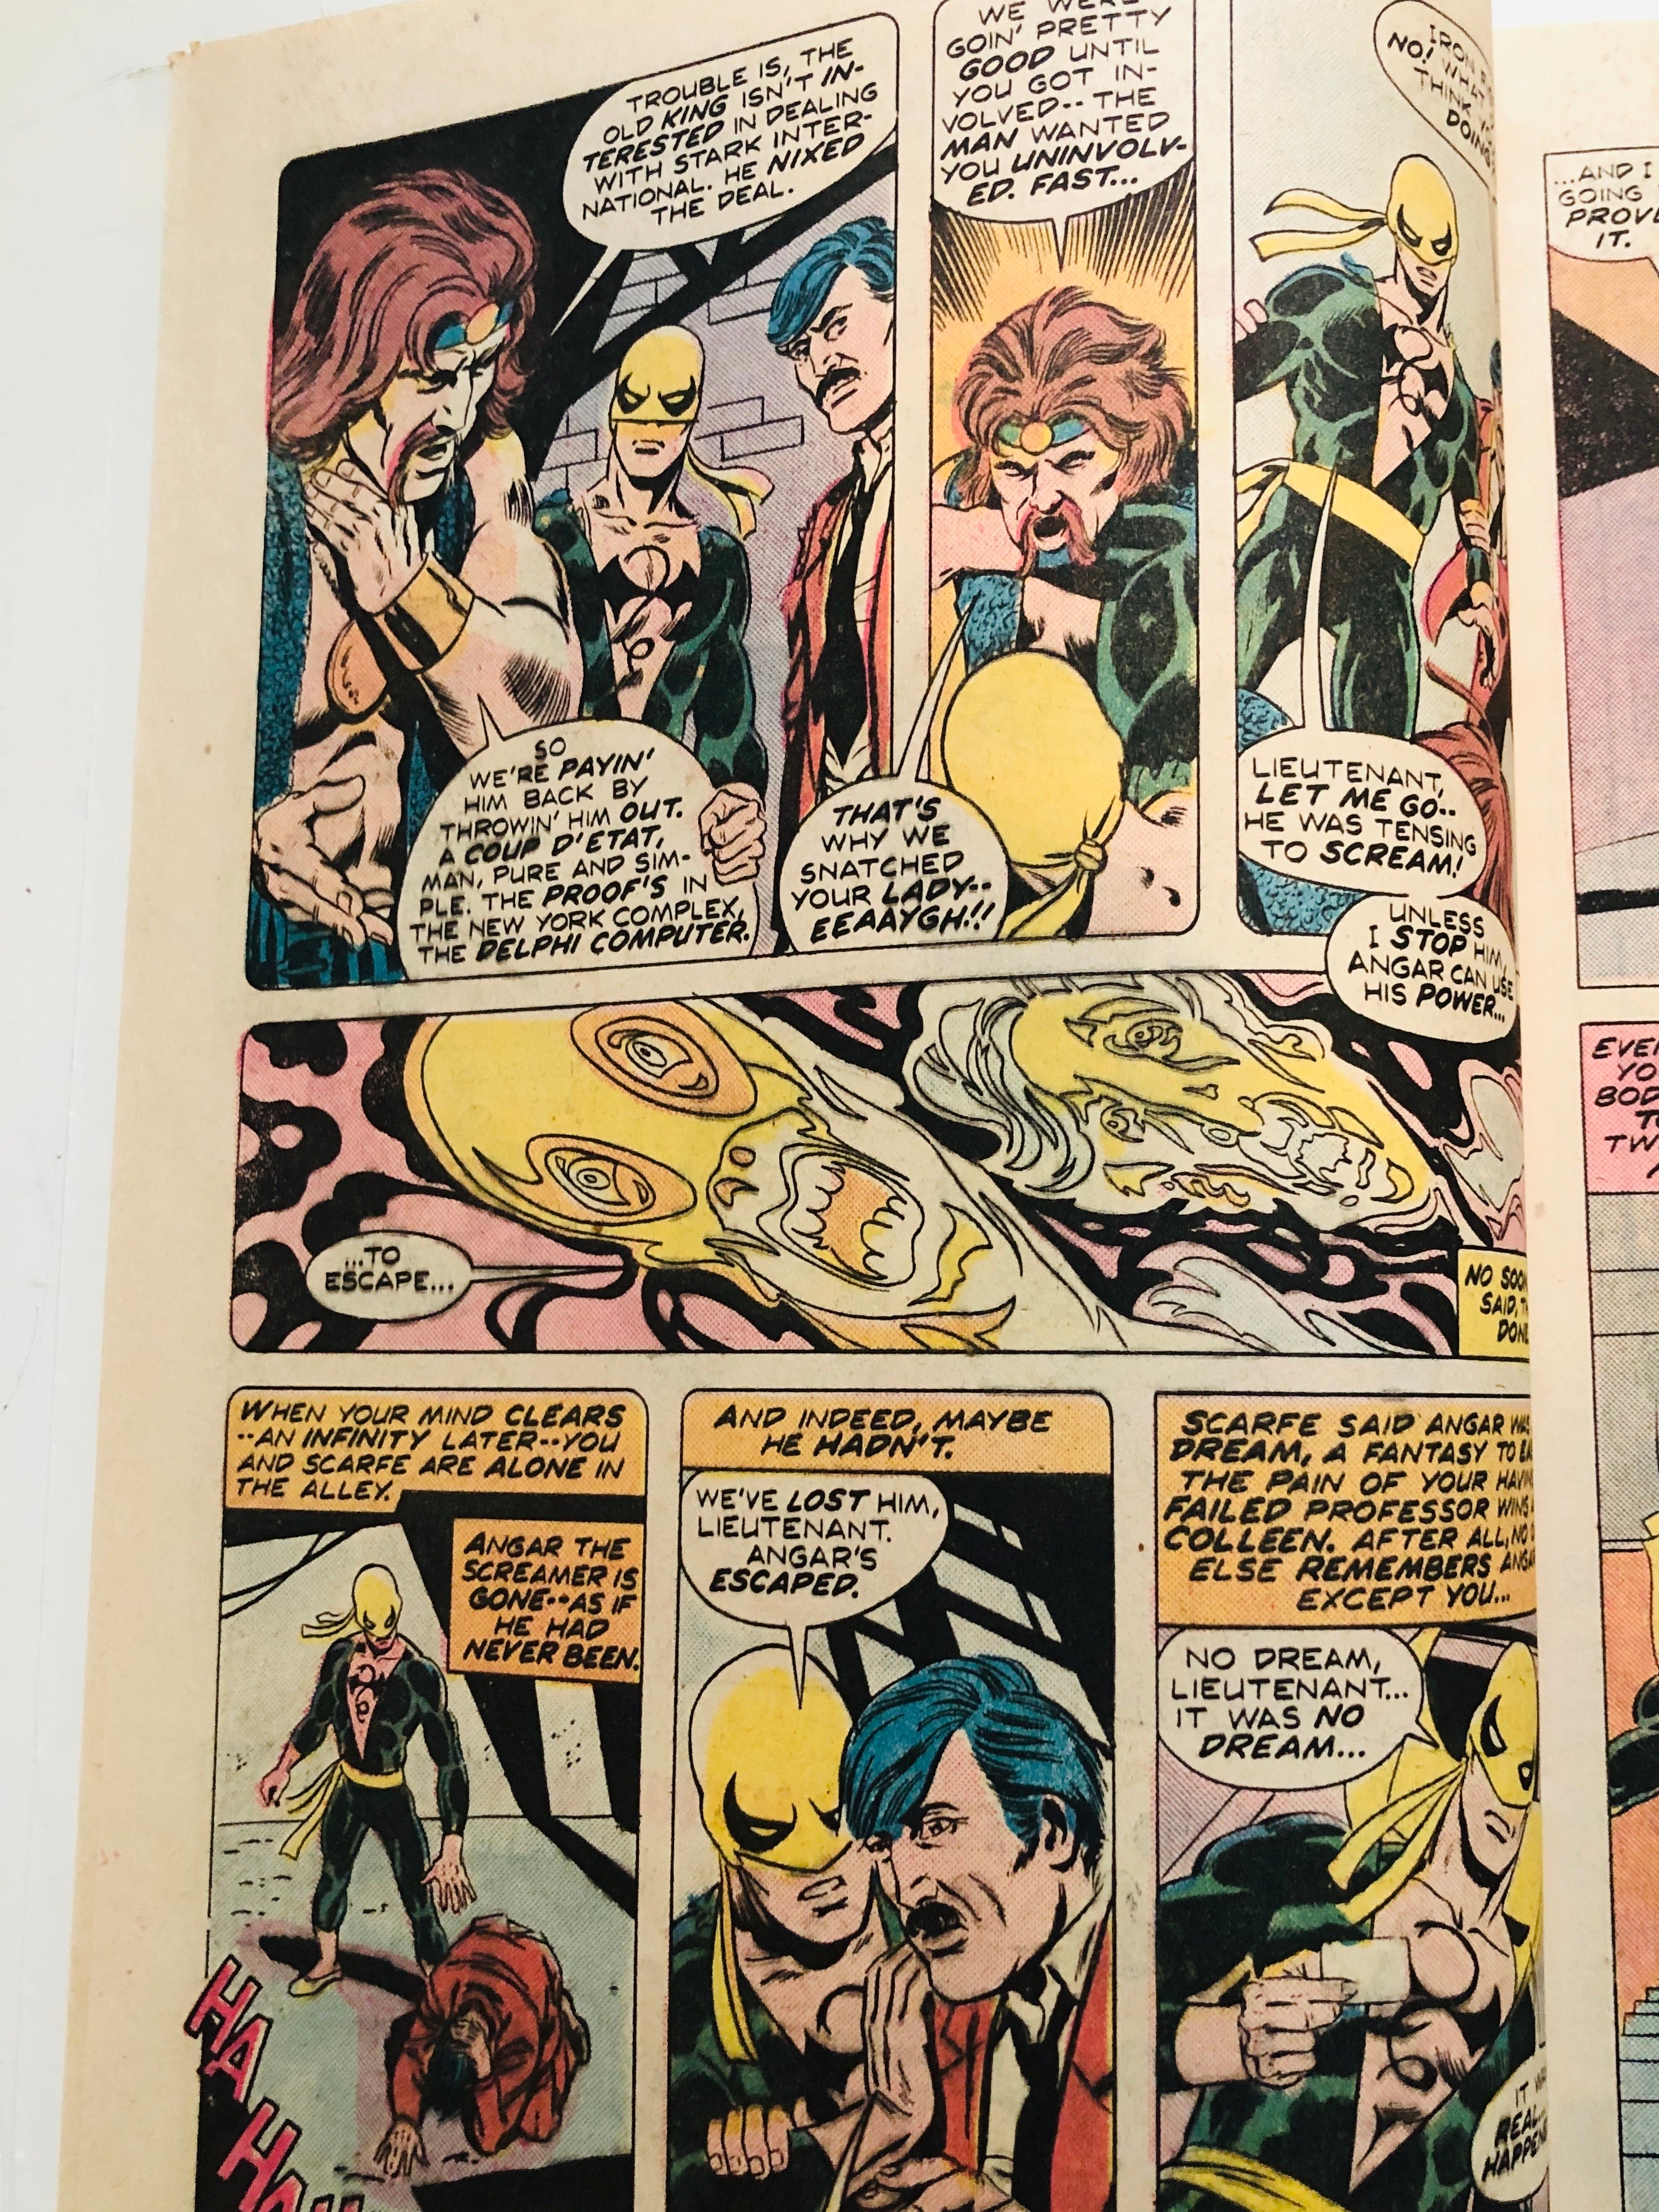 Iron Fist #1 high grade comic book 1975